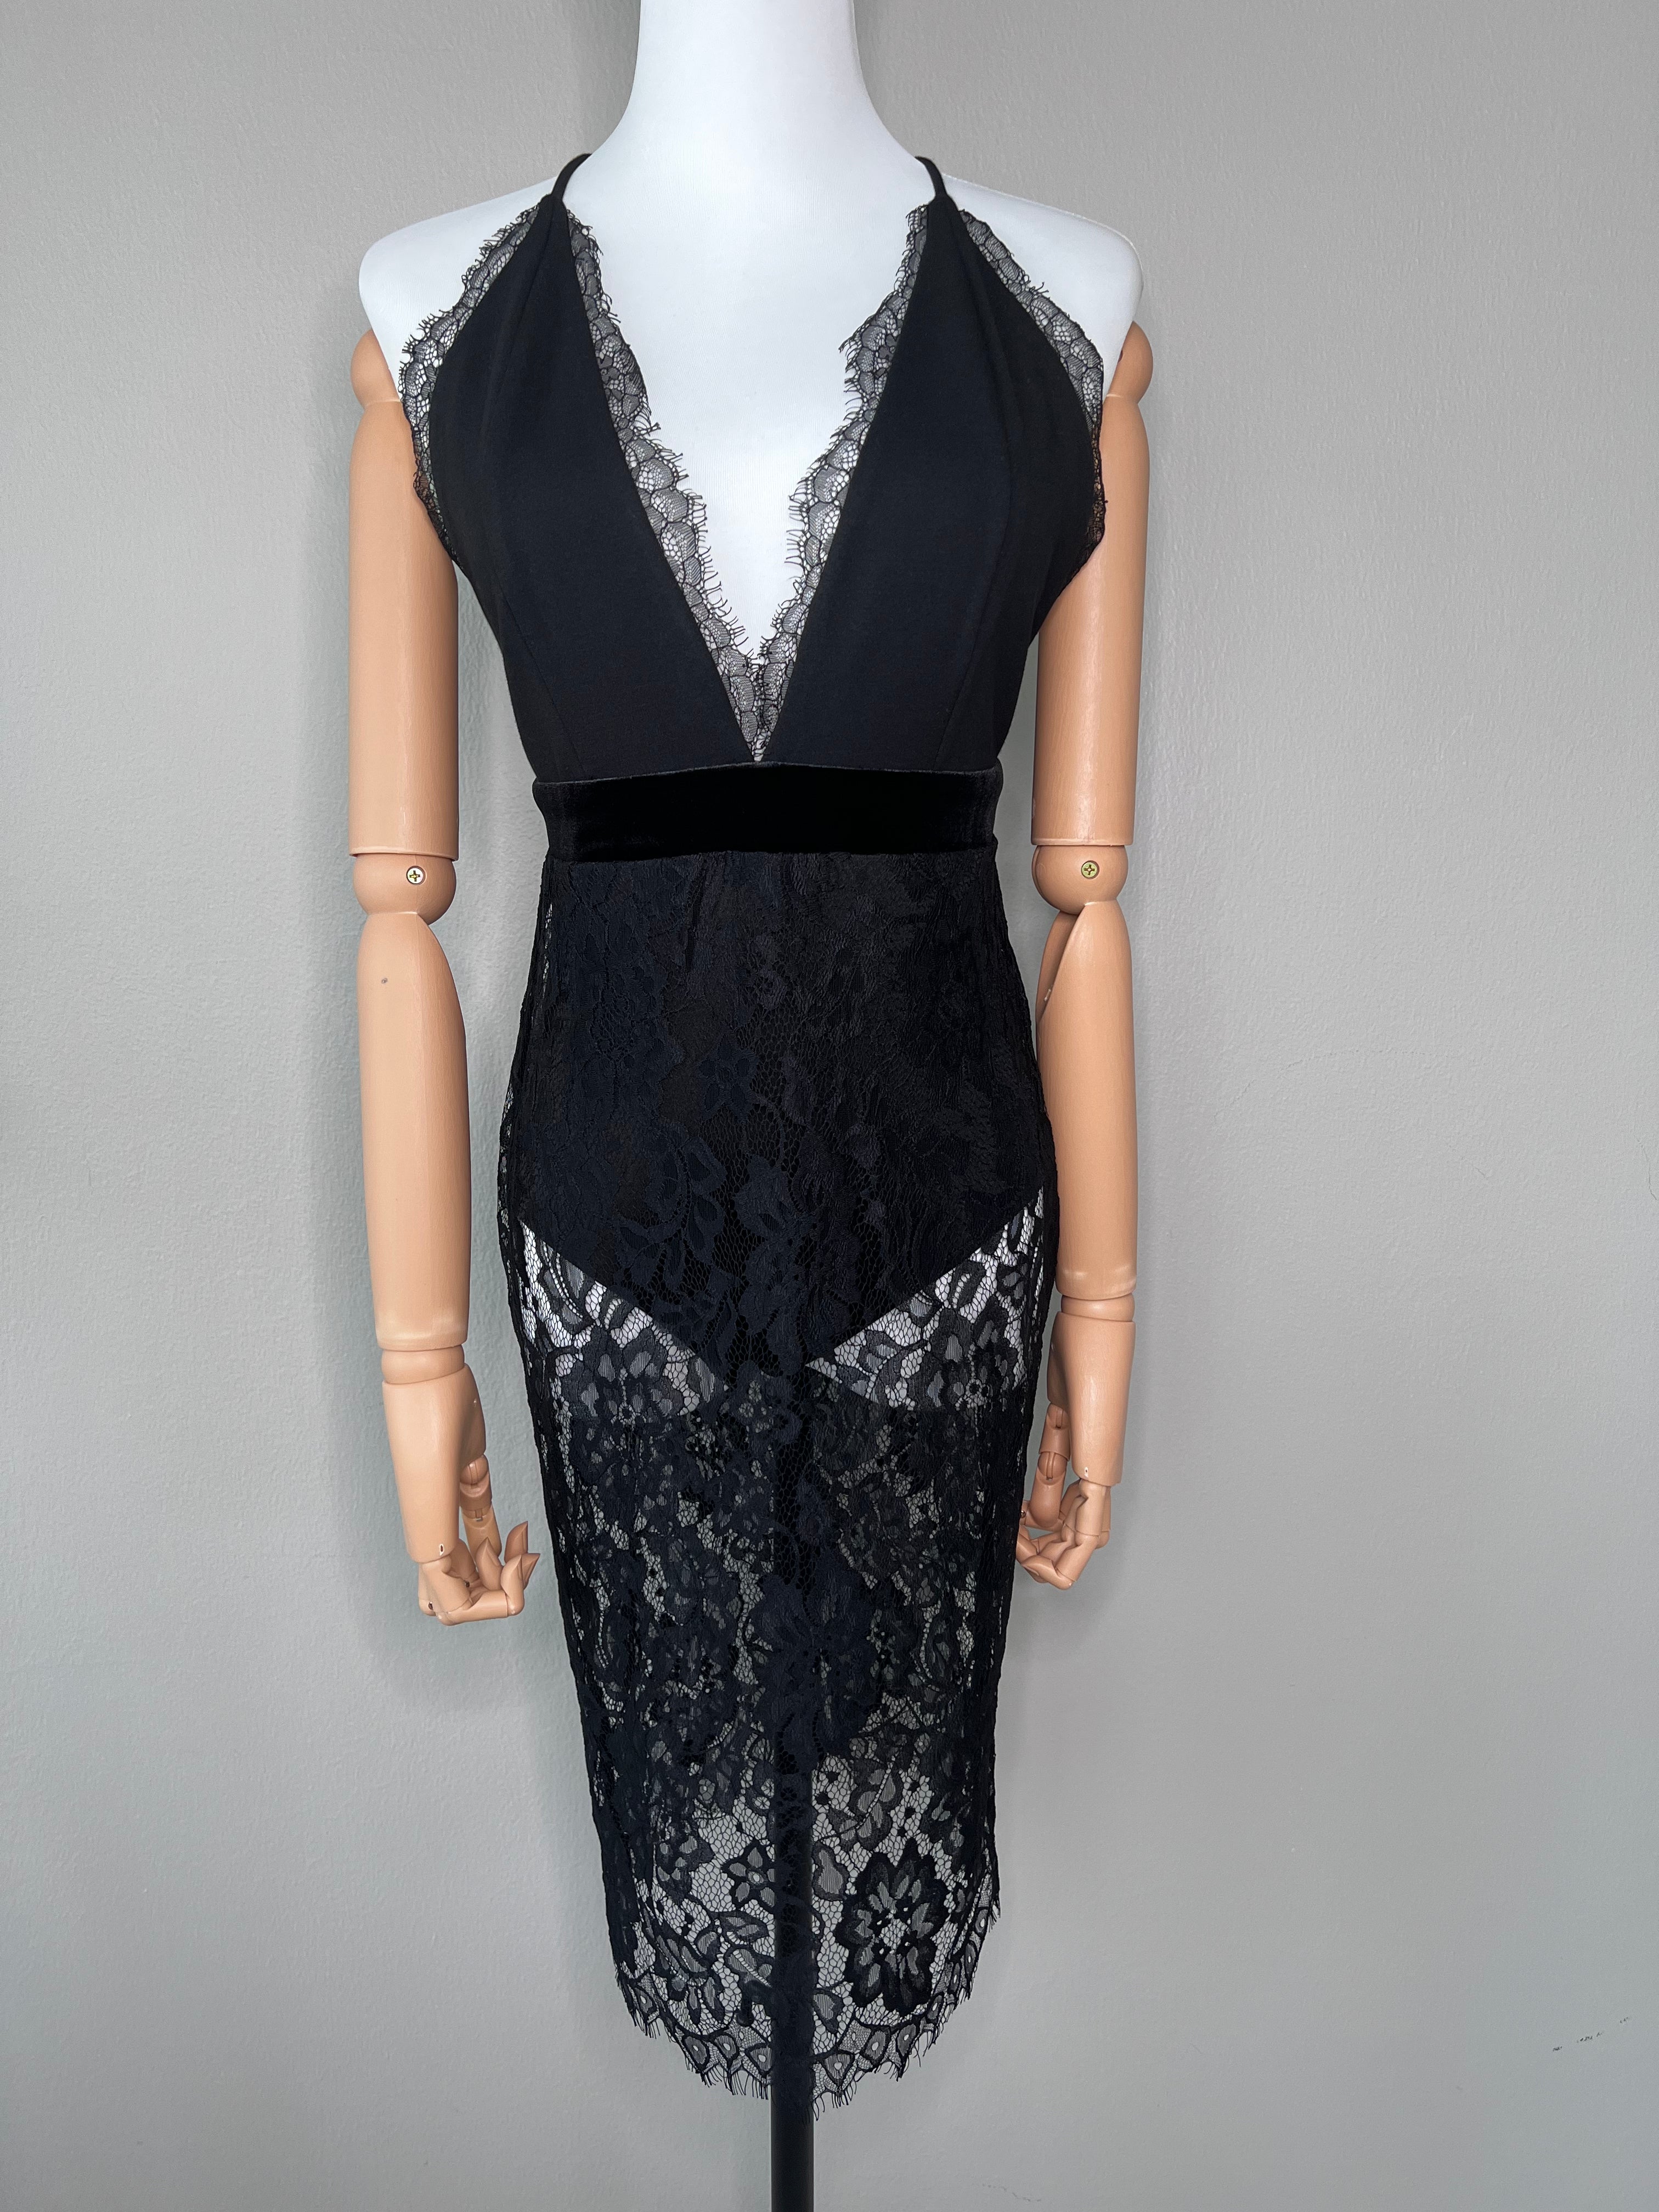 Black Lace Spaghetti Strap Bodysuit Dress - Michaelcostello